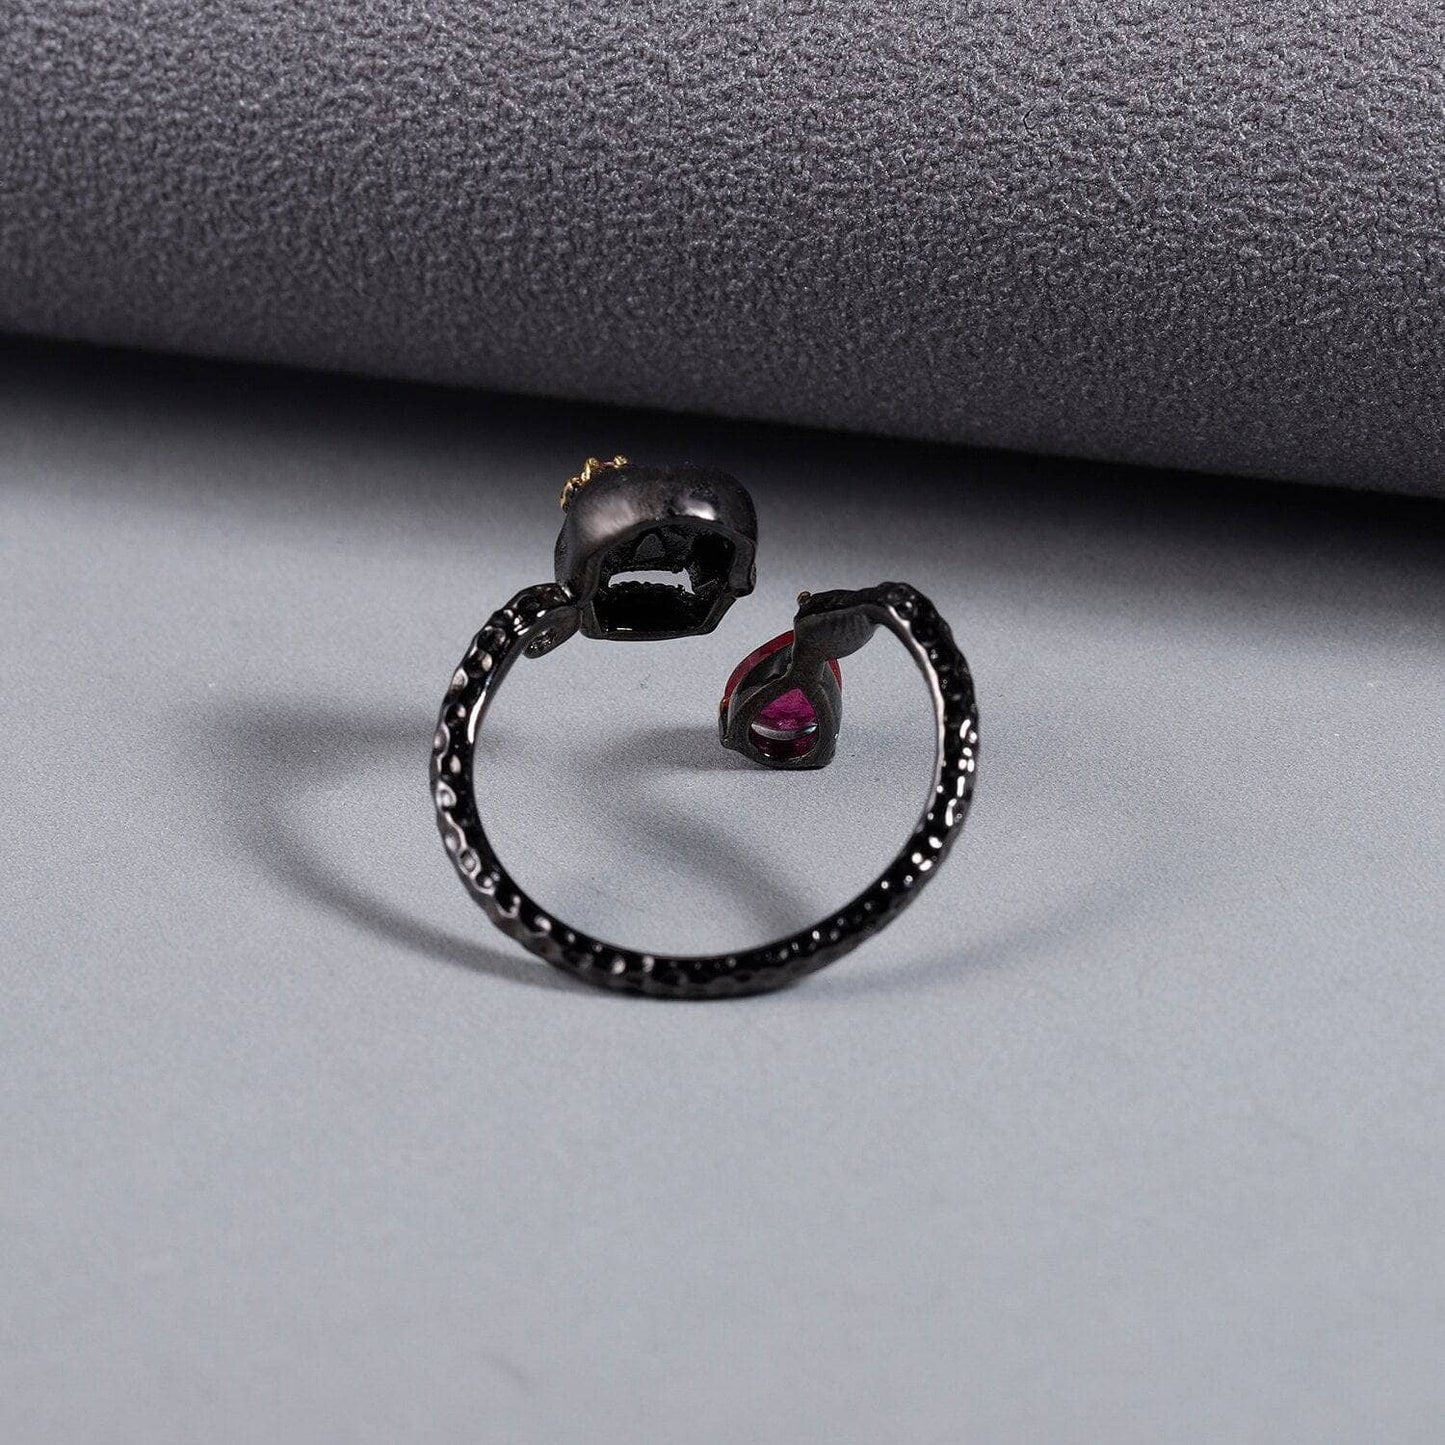 0.9Ct Natural Ruby Gemstone Adjustable Skull Ring - Black Diamonds New York